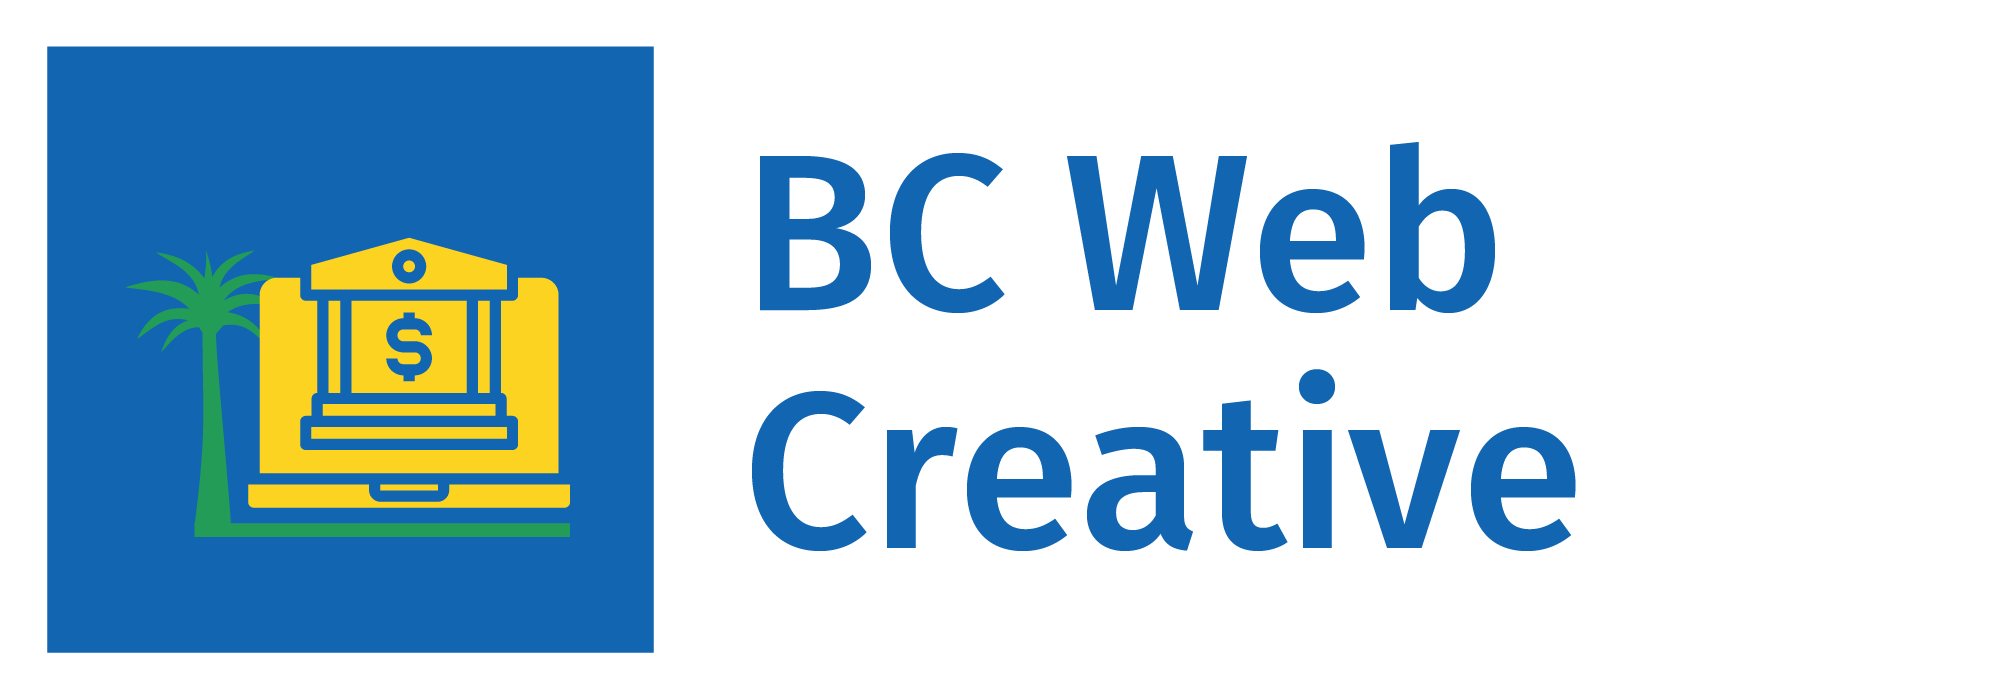 BC Web Creative